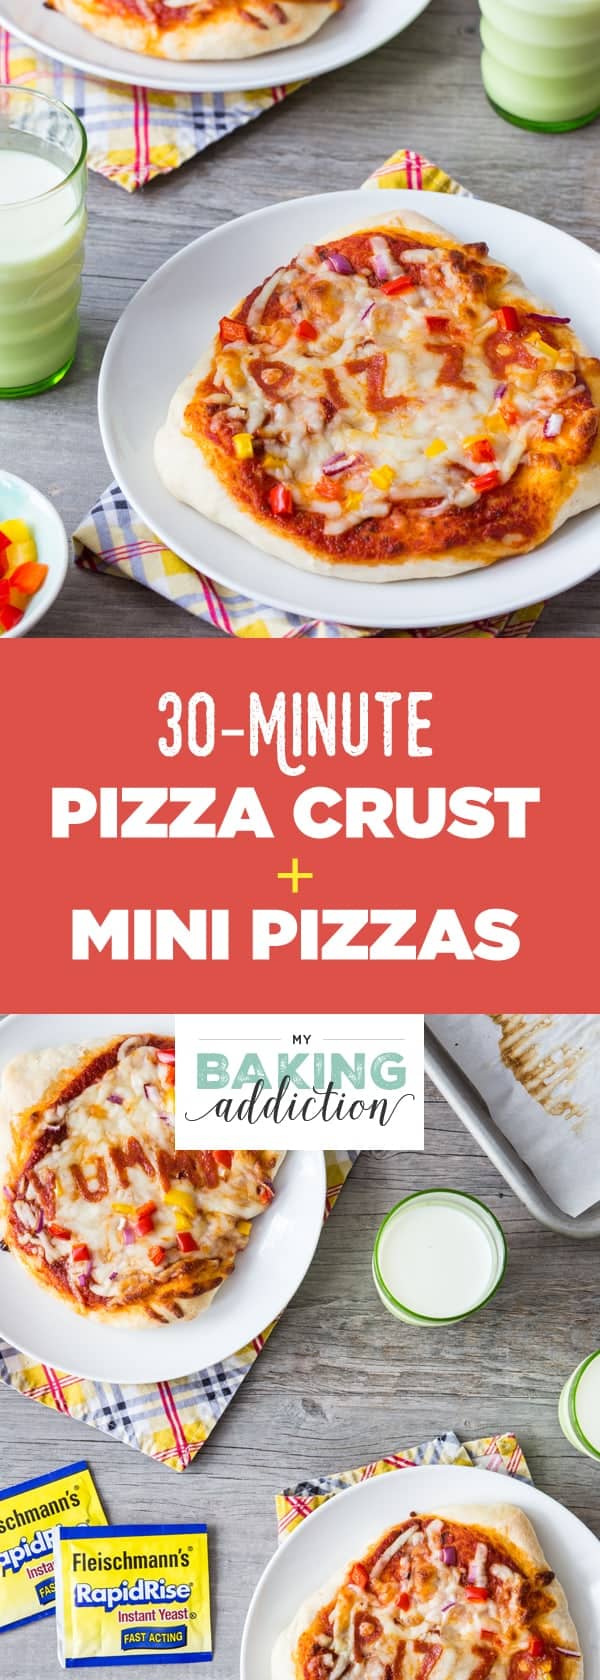 30 Minute Pizza Crust + Mini Pizzas - My Baking Addiction